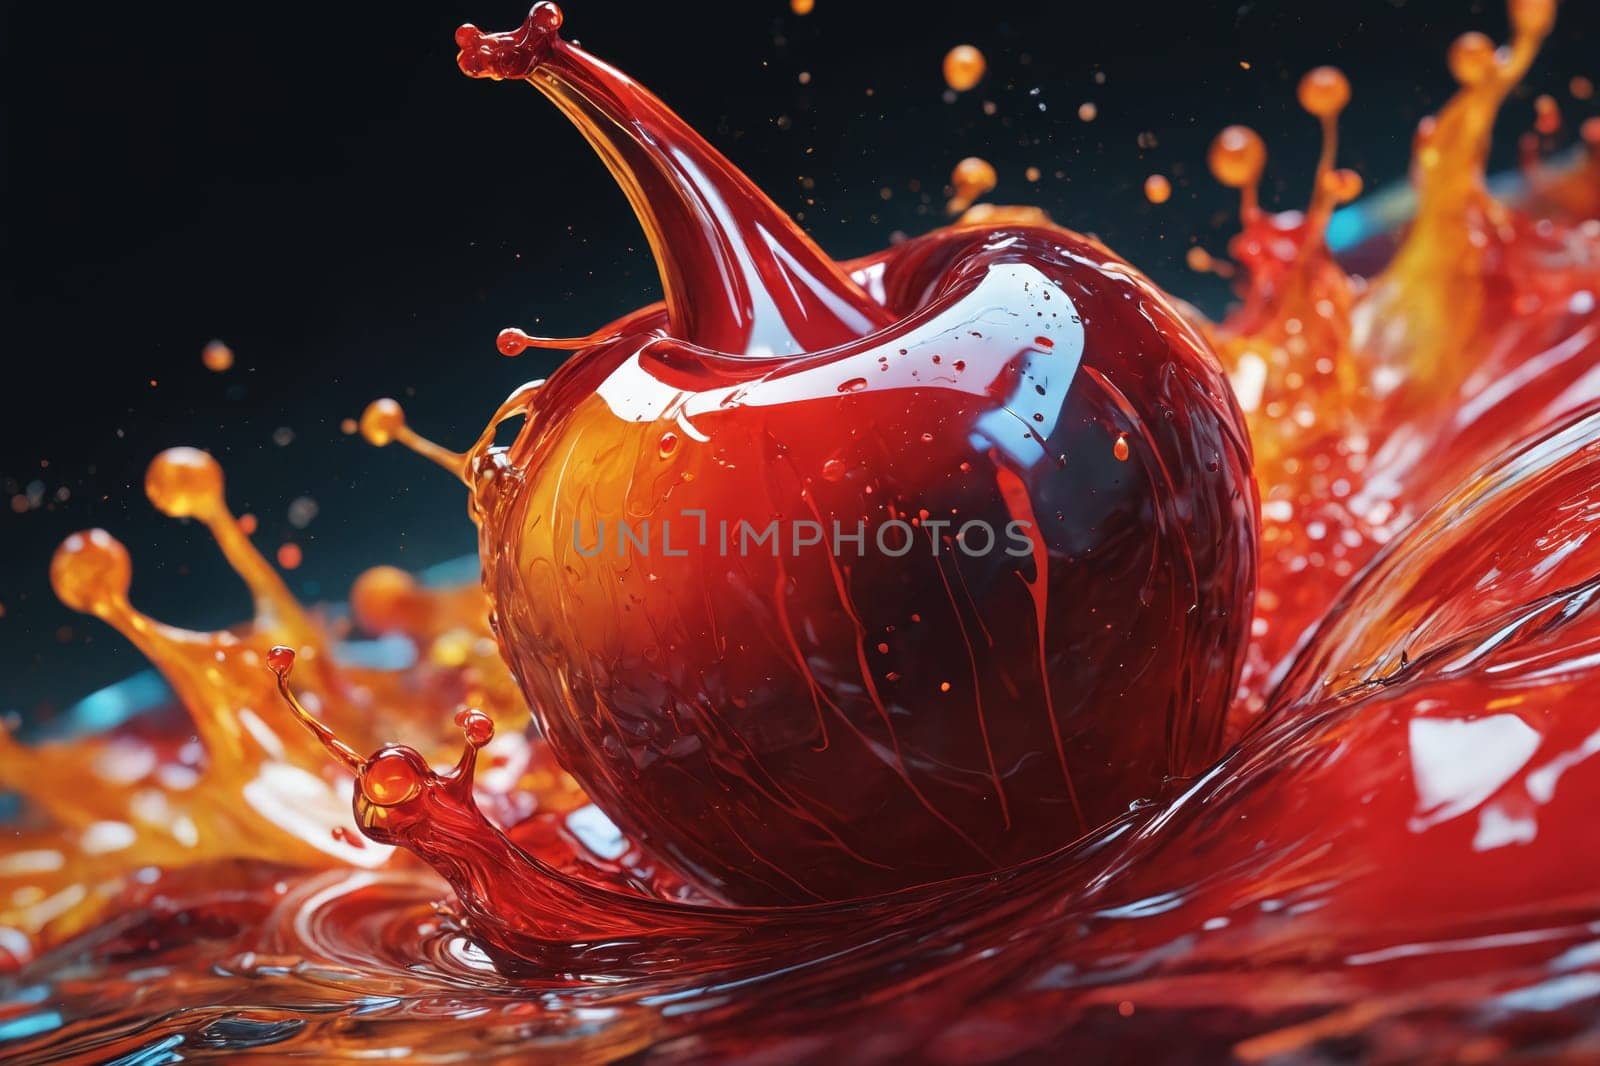 Cherries make a splash into a bowl of water, with a vivid orange splash encircling them.